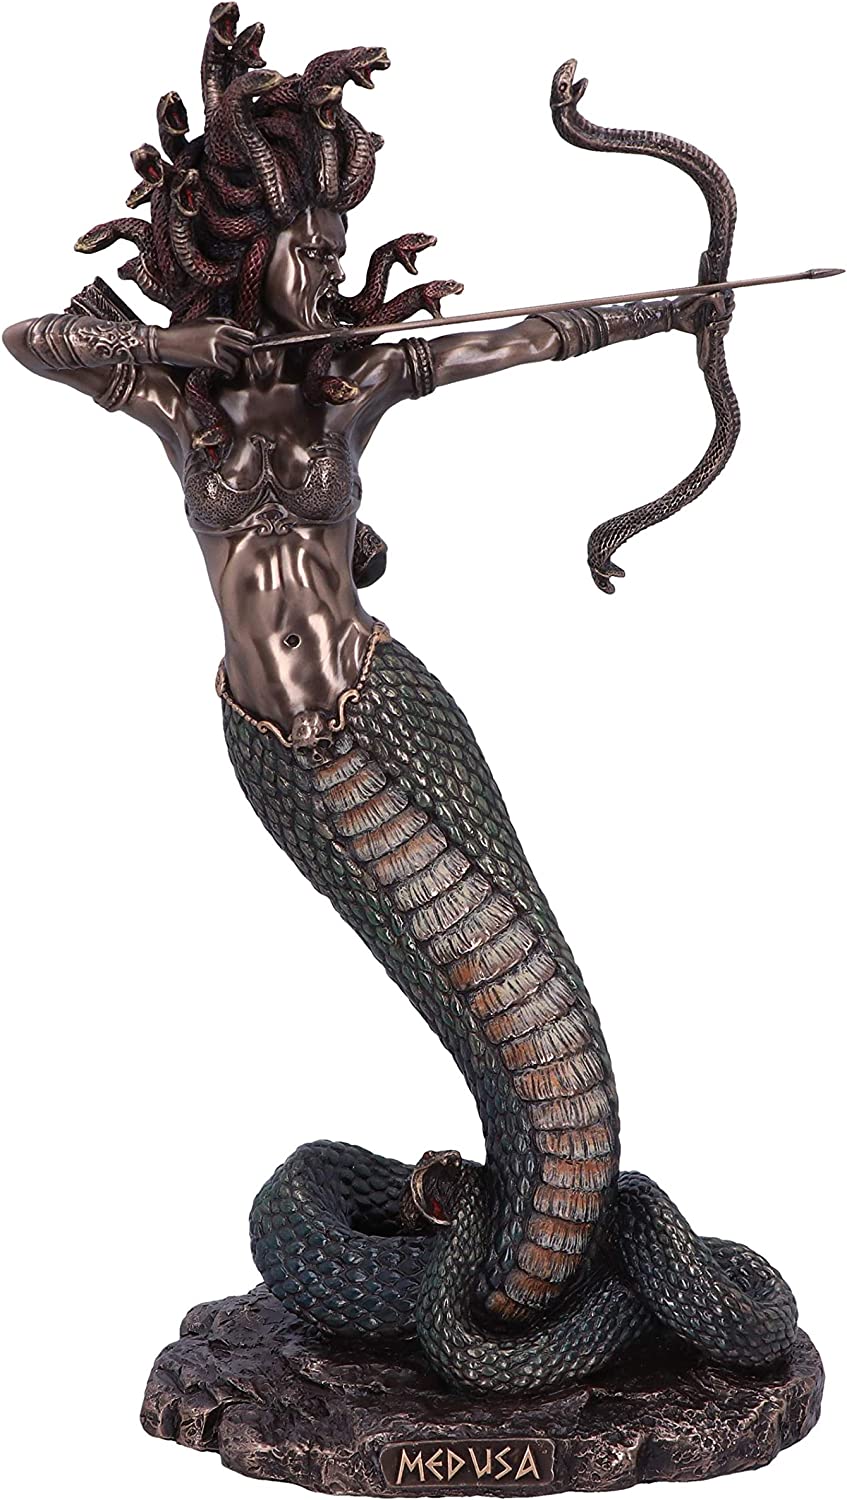 Nemesis Now Bronze mythologische Zornfigur der Medusa, 36 cm, C5444T1